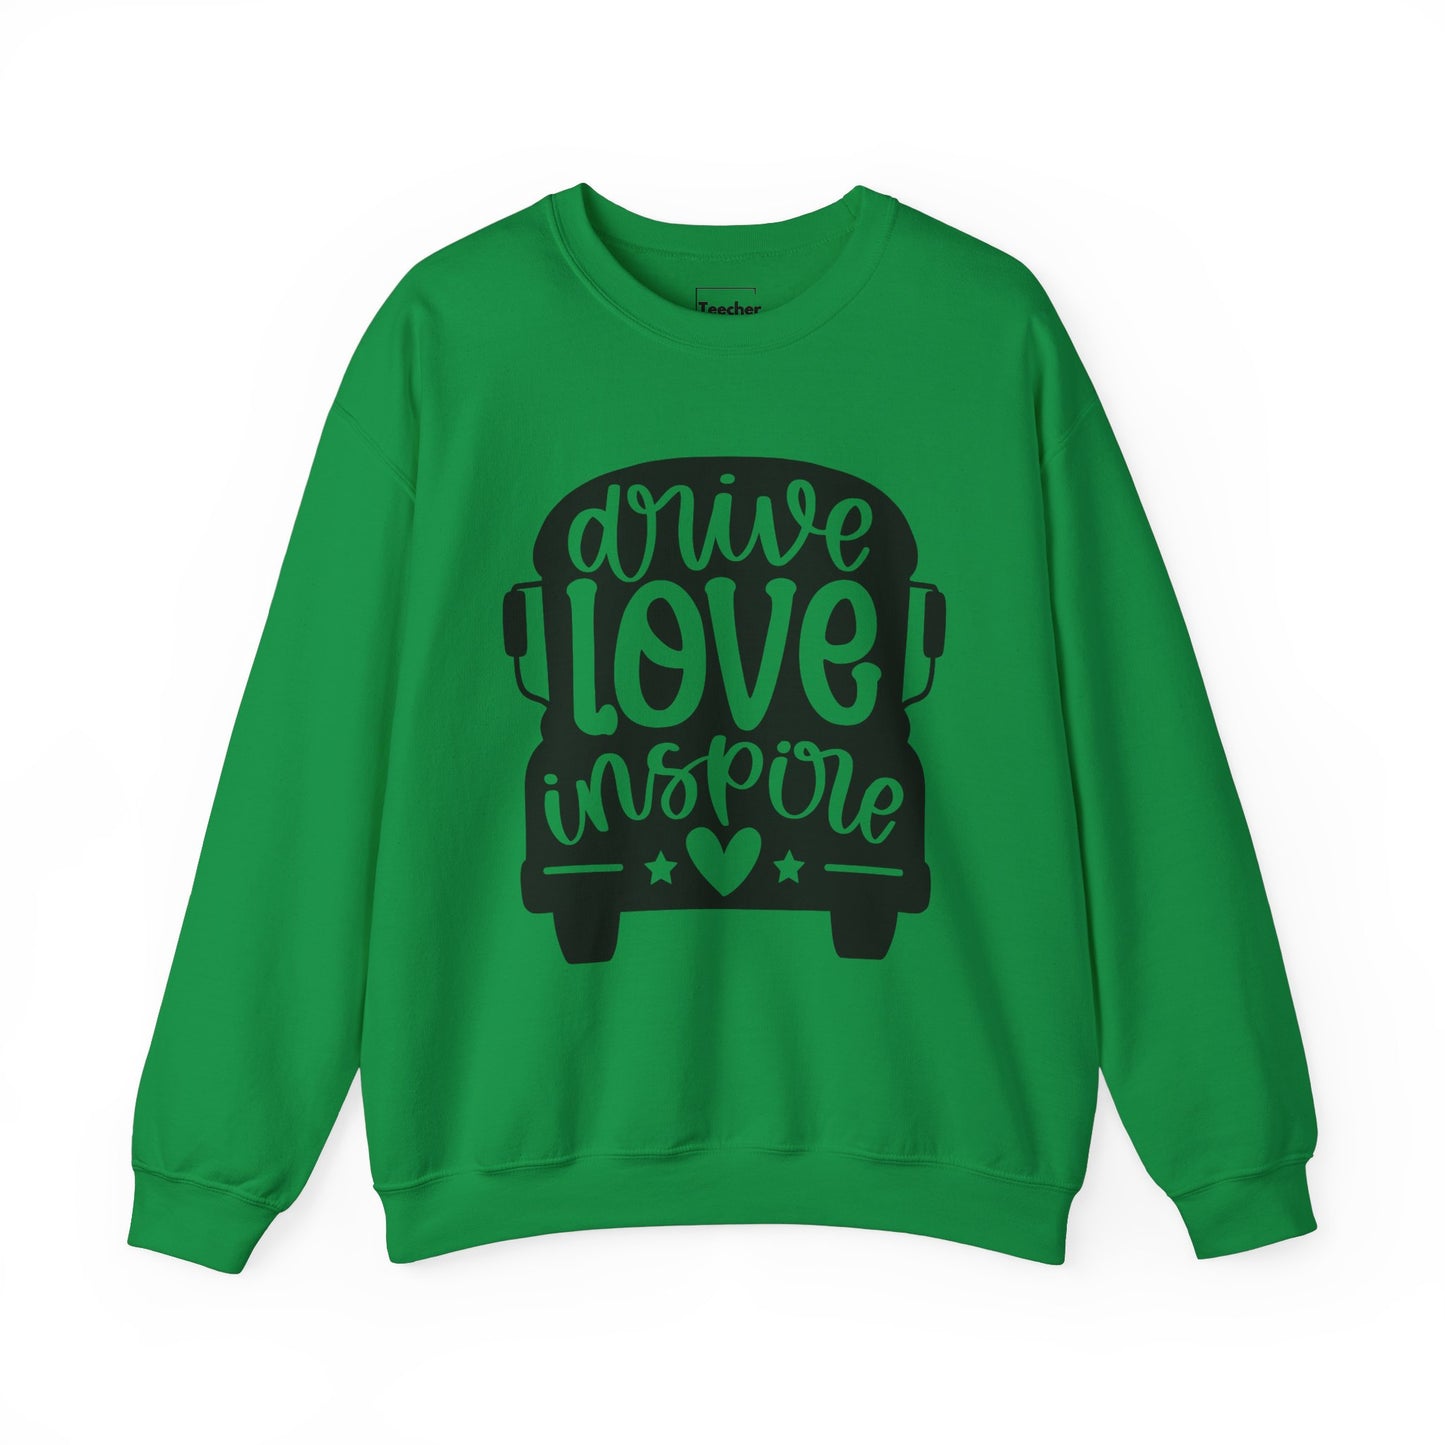 Drive Love Inspire Sweatshirt